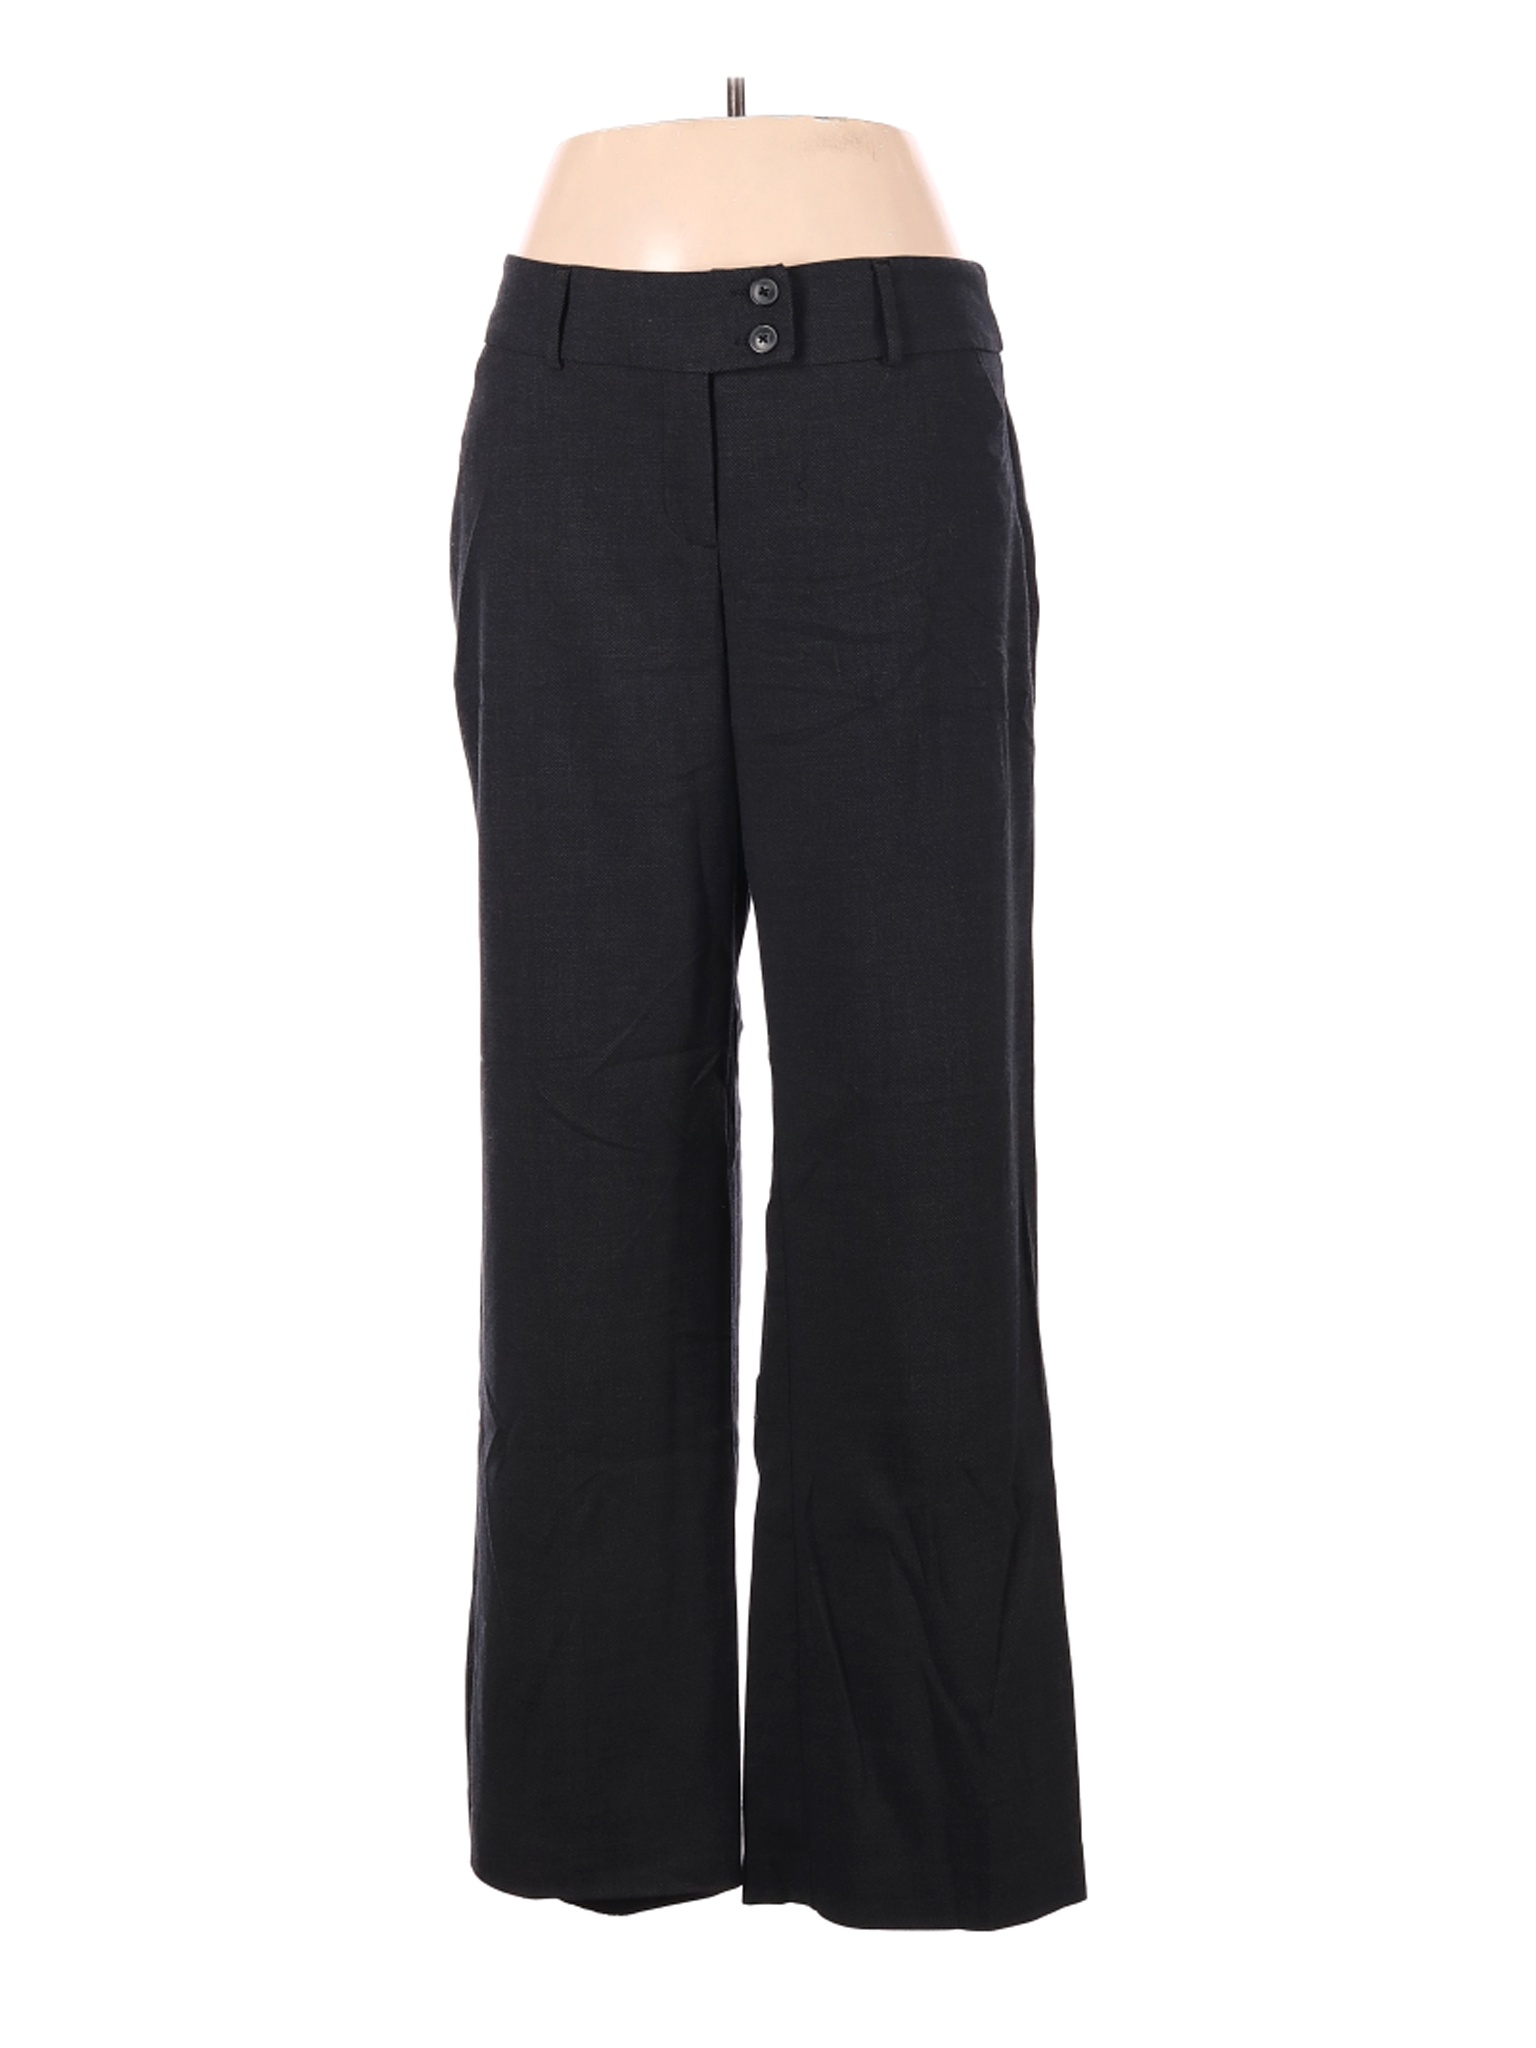 Apt. 9 Women Black Casual Pants 16 | eBay